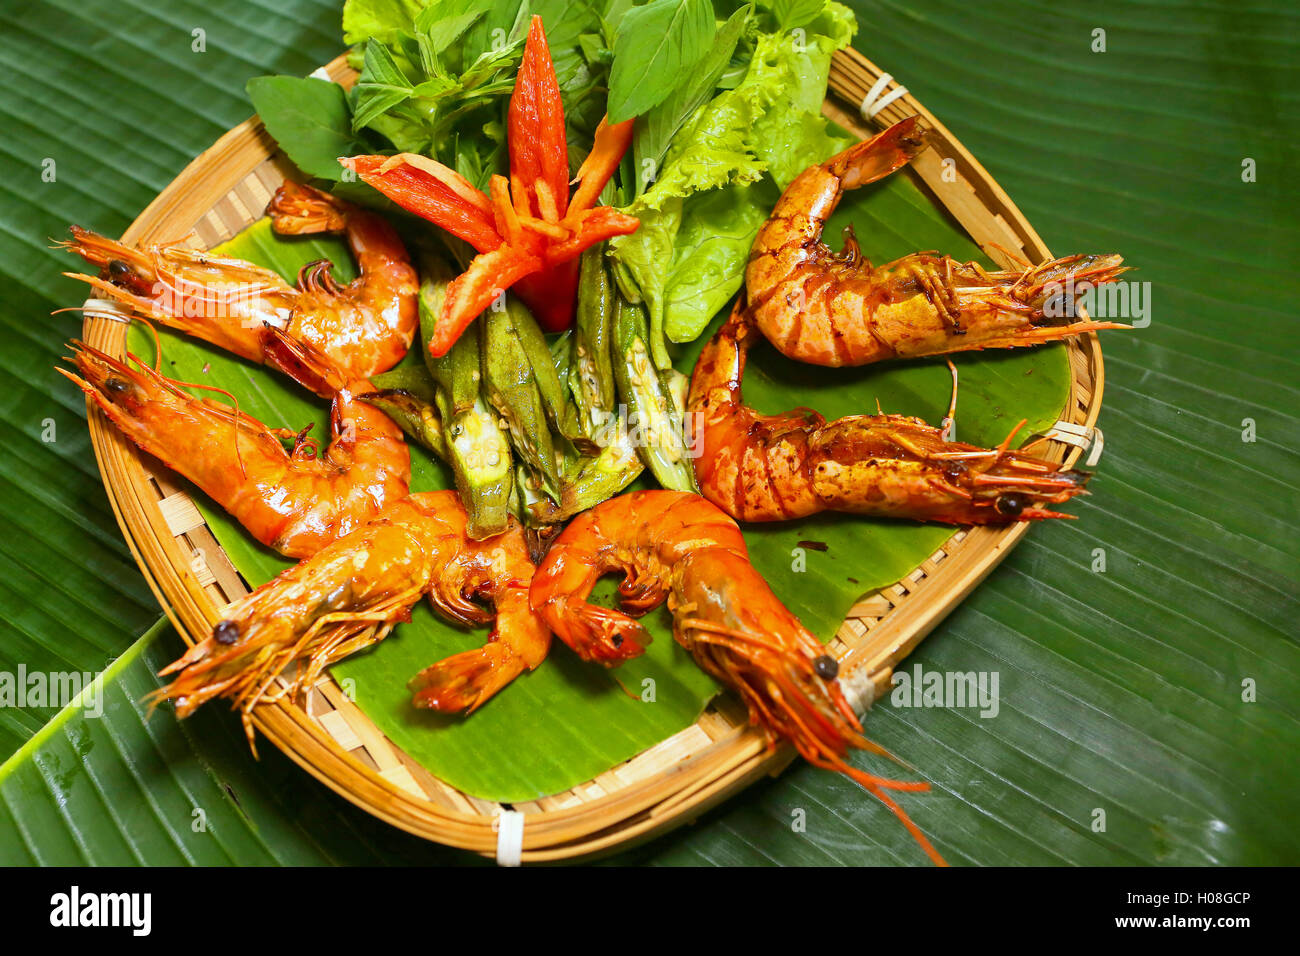 Grilled shrimp on vietnamese roof tile Stock Photo